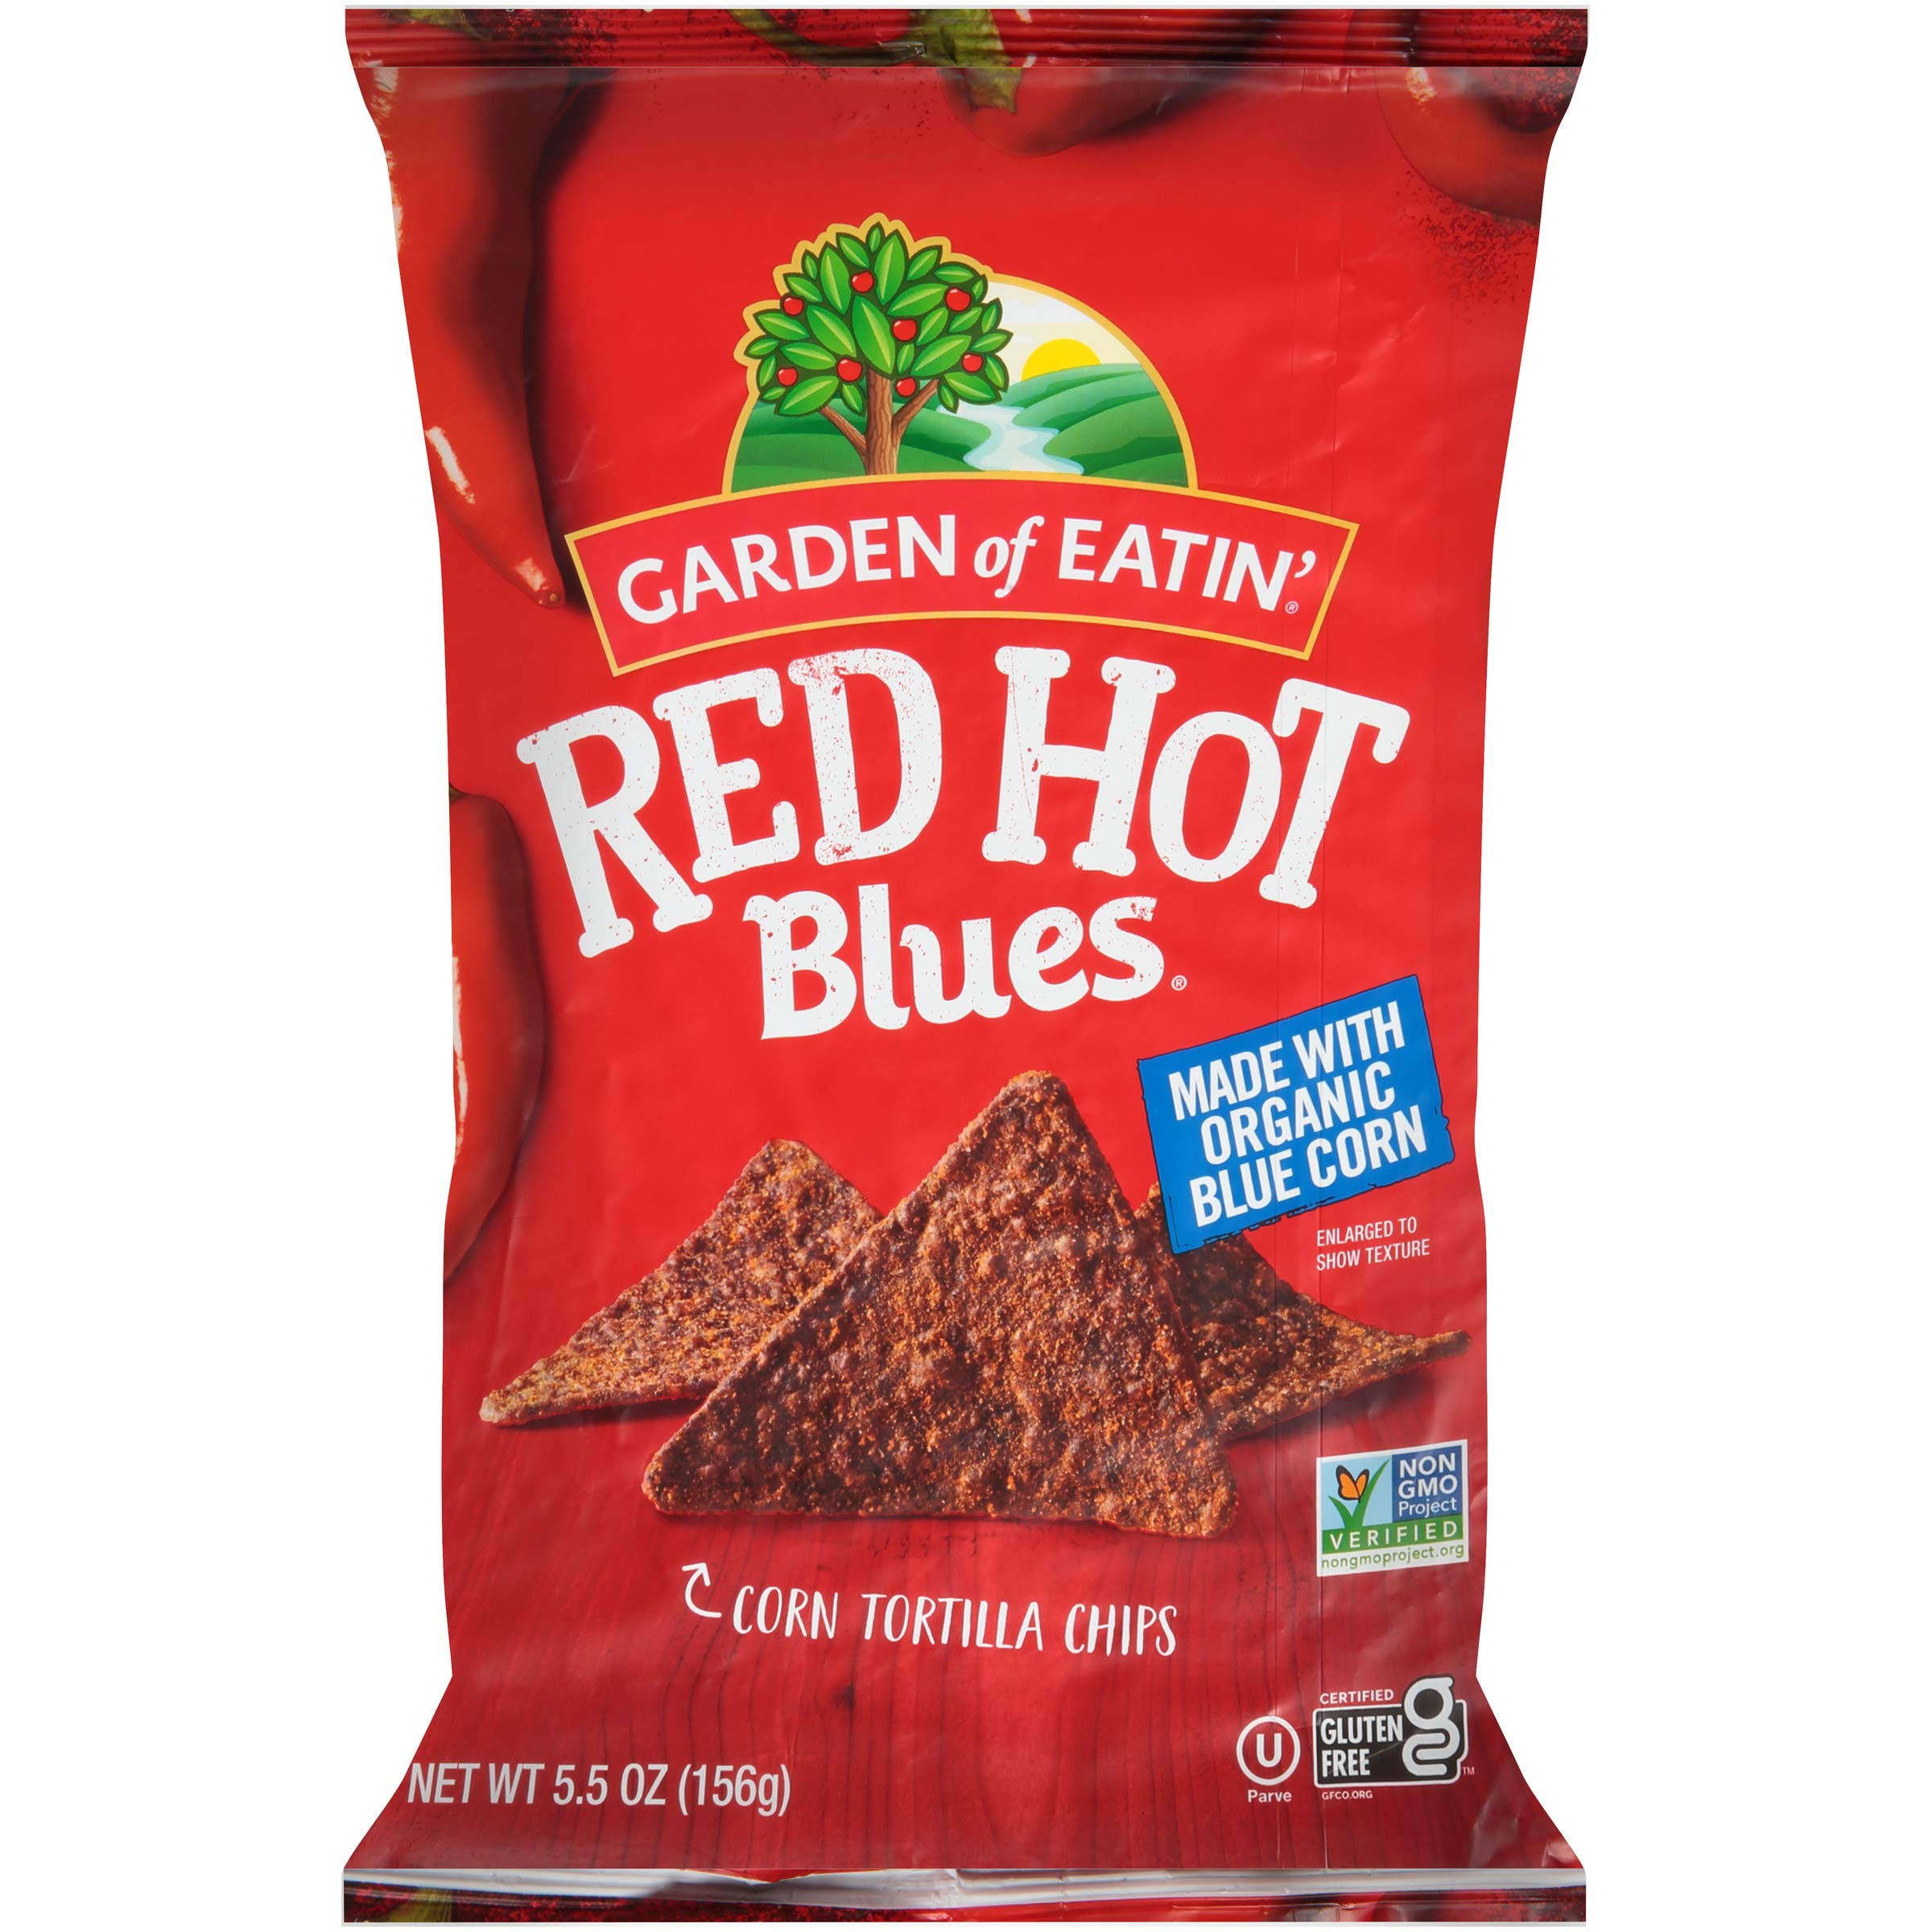 Garden Of Eatin' Corn Tortillas Chips, Red Hot Blues - 5.5 oz